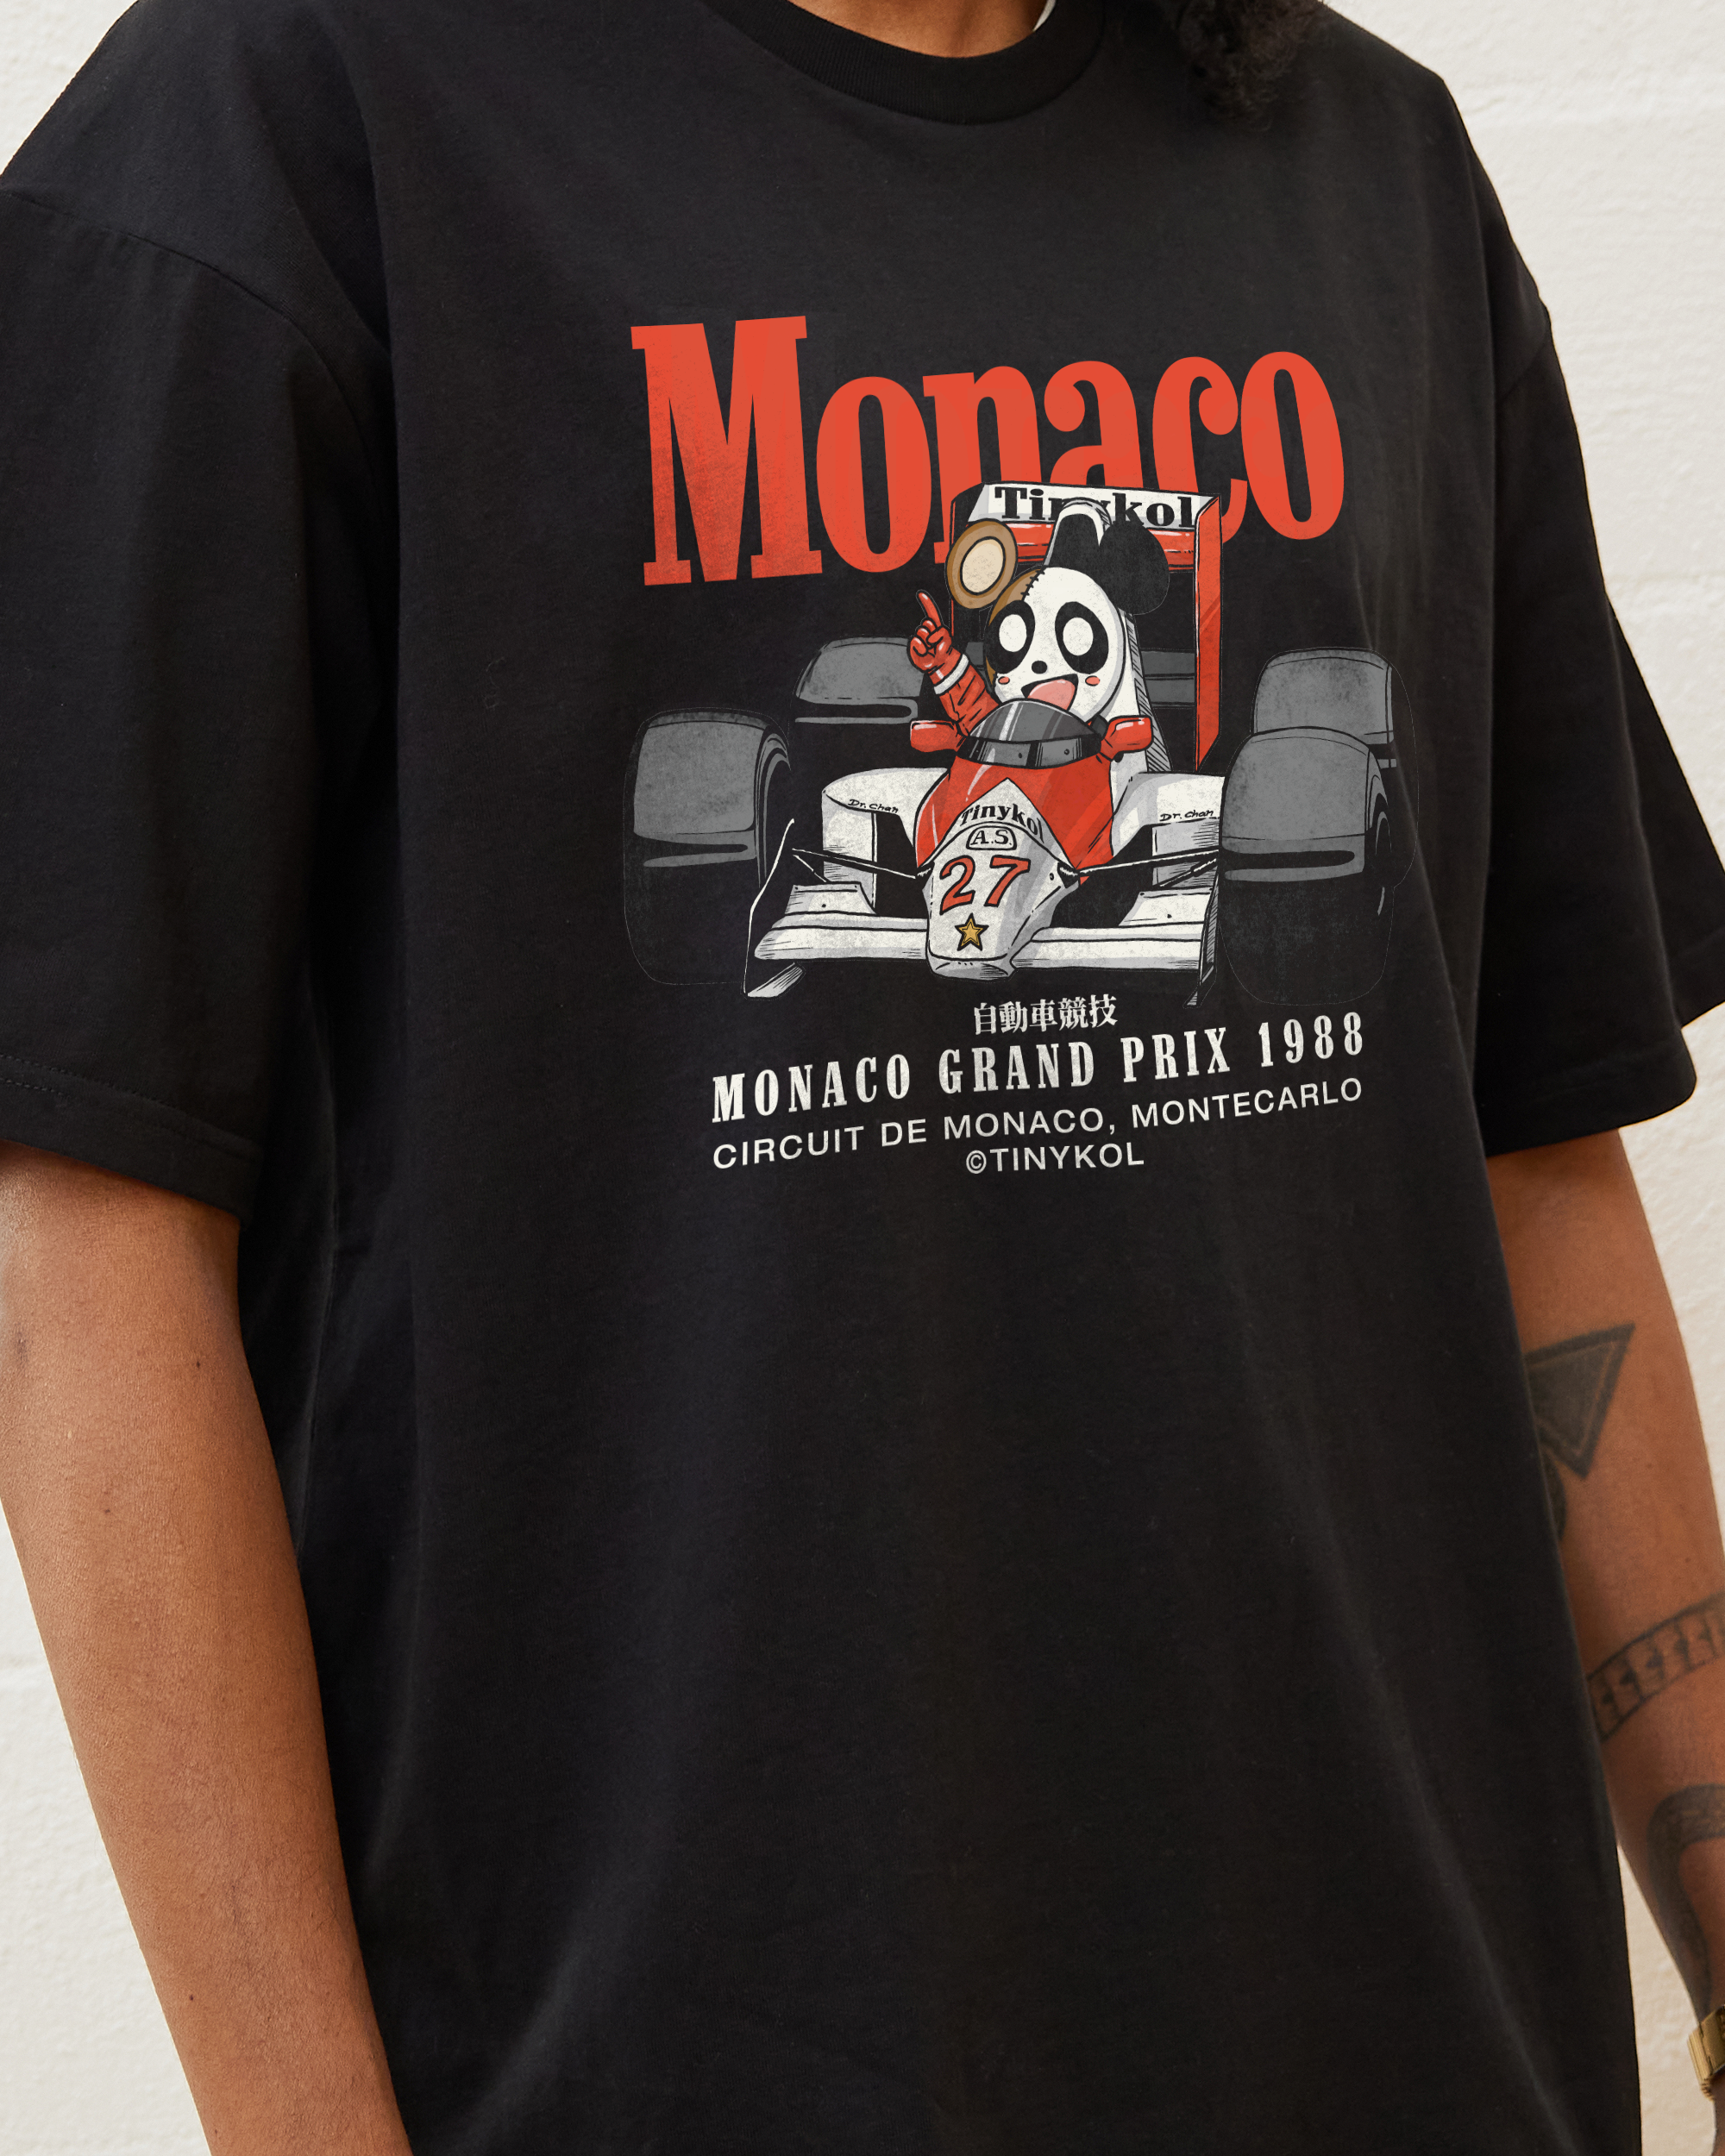 Monaco Racing T-Shirt